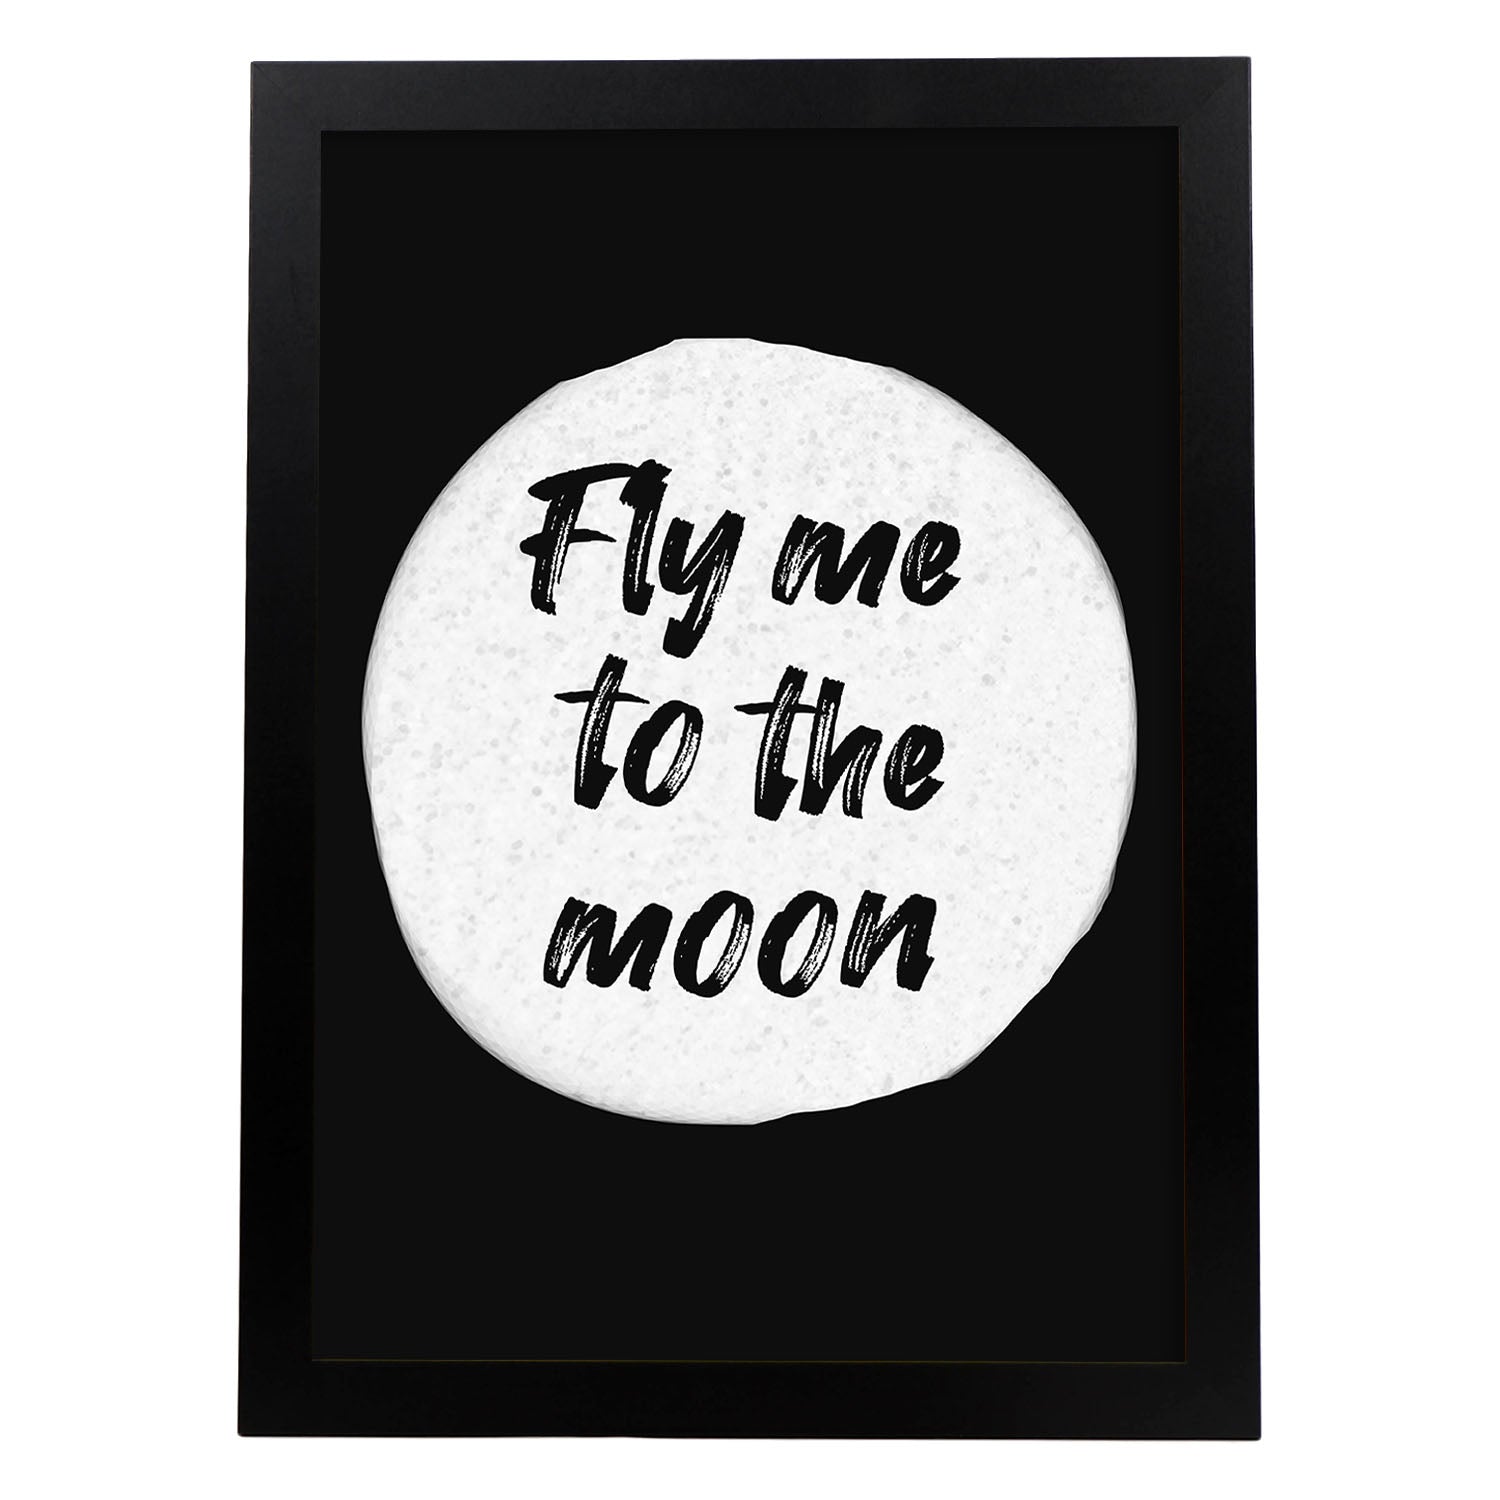 Lamina artistica decorativa con ilustración de fly me to the moon estilo Mensaje inspiracional-Artwork-Nacnic-A4-Marco Negro-Nacnic Estudio SL